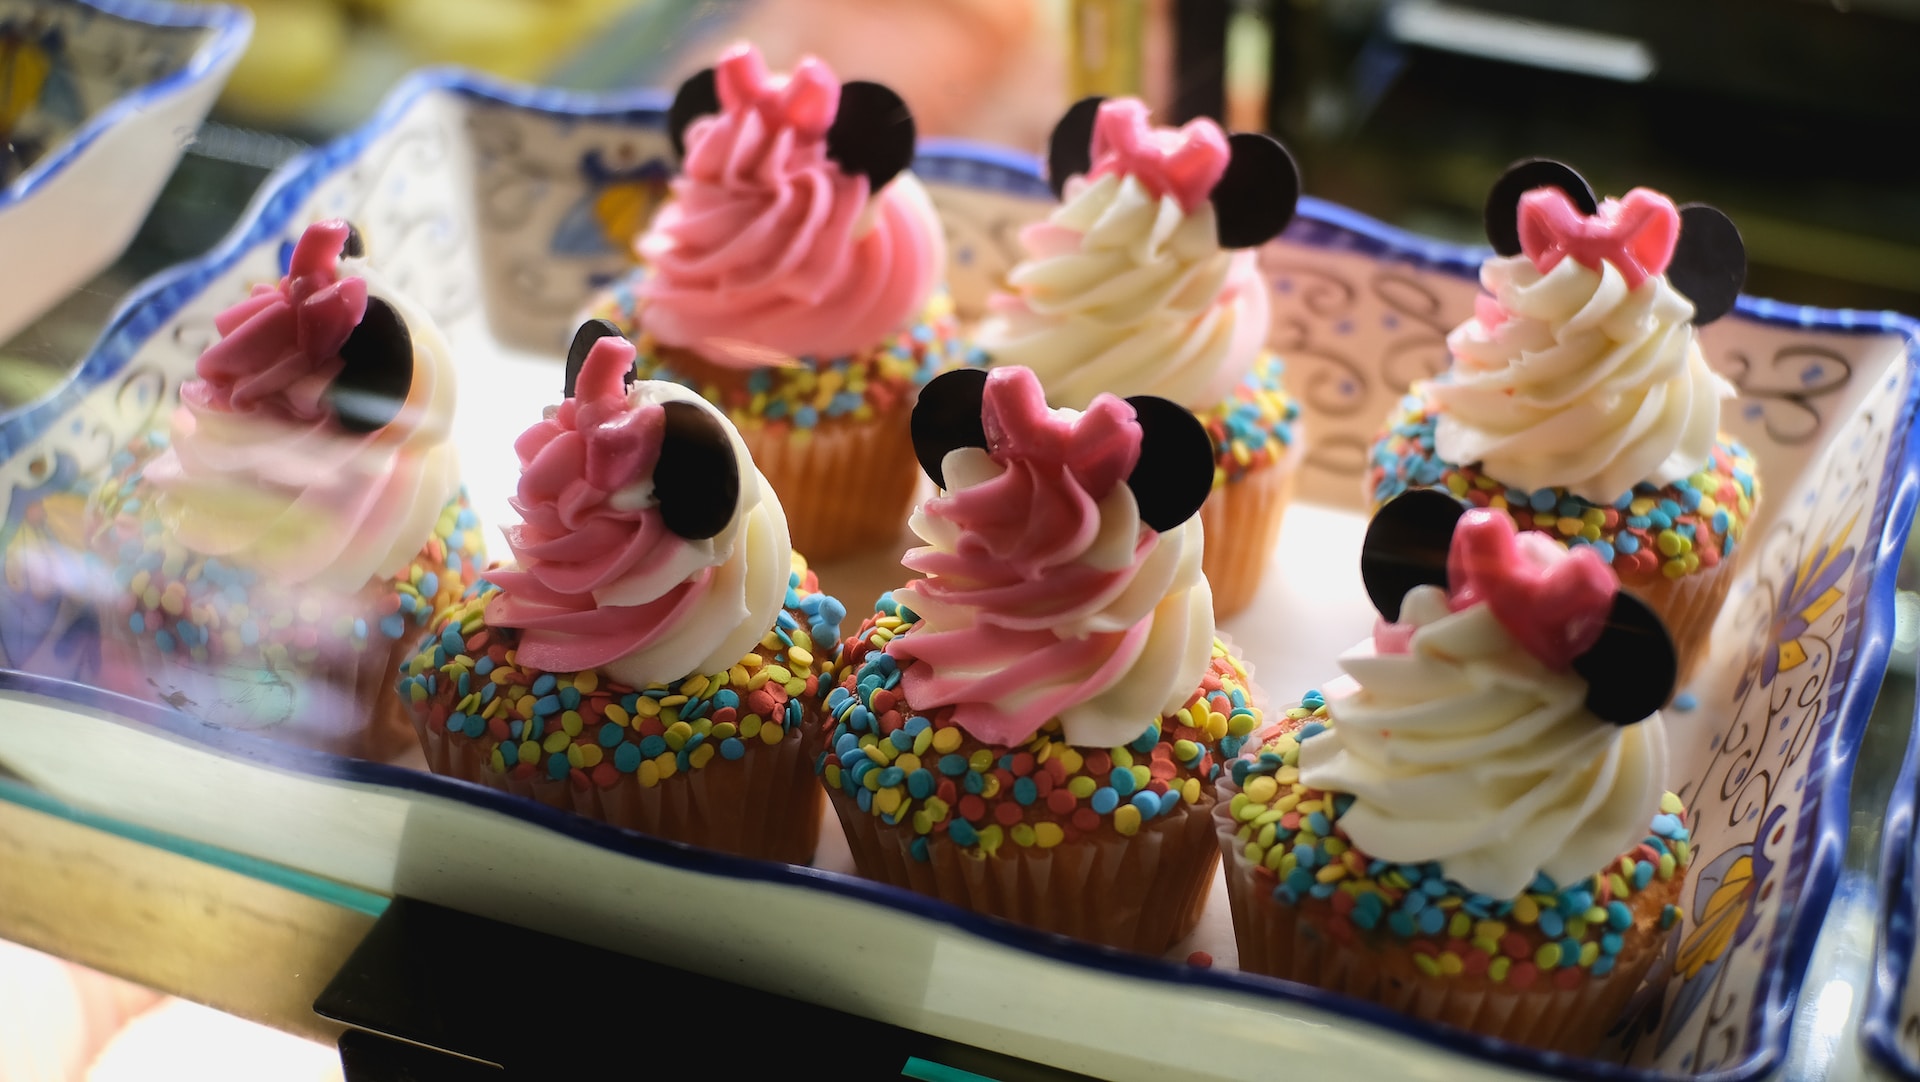 Disney cupcakes to serve at a Disney wedding